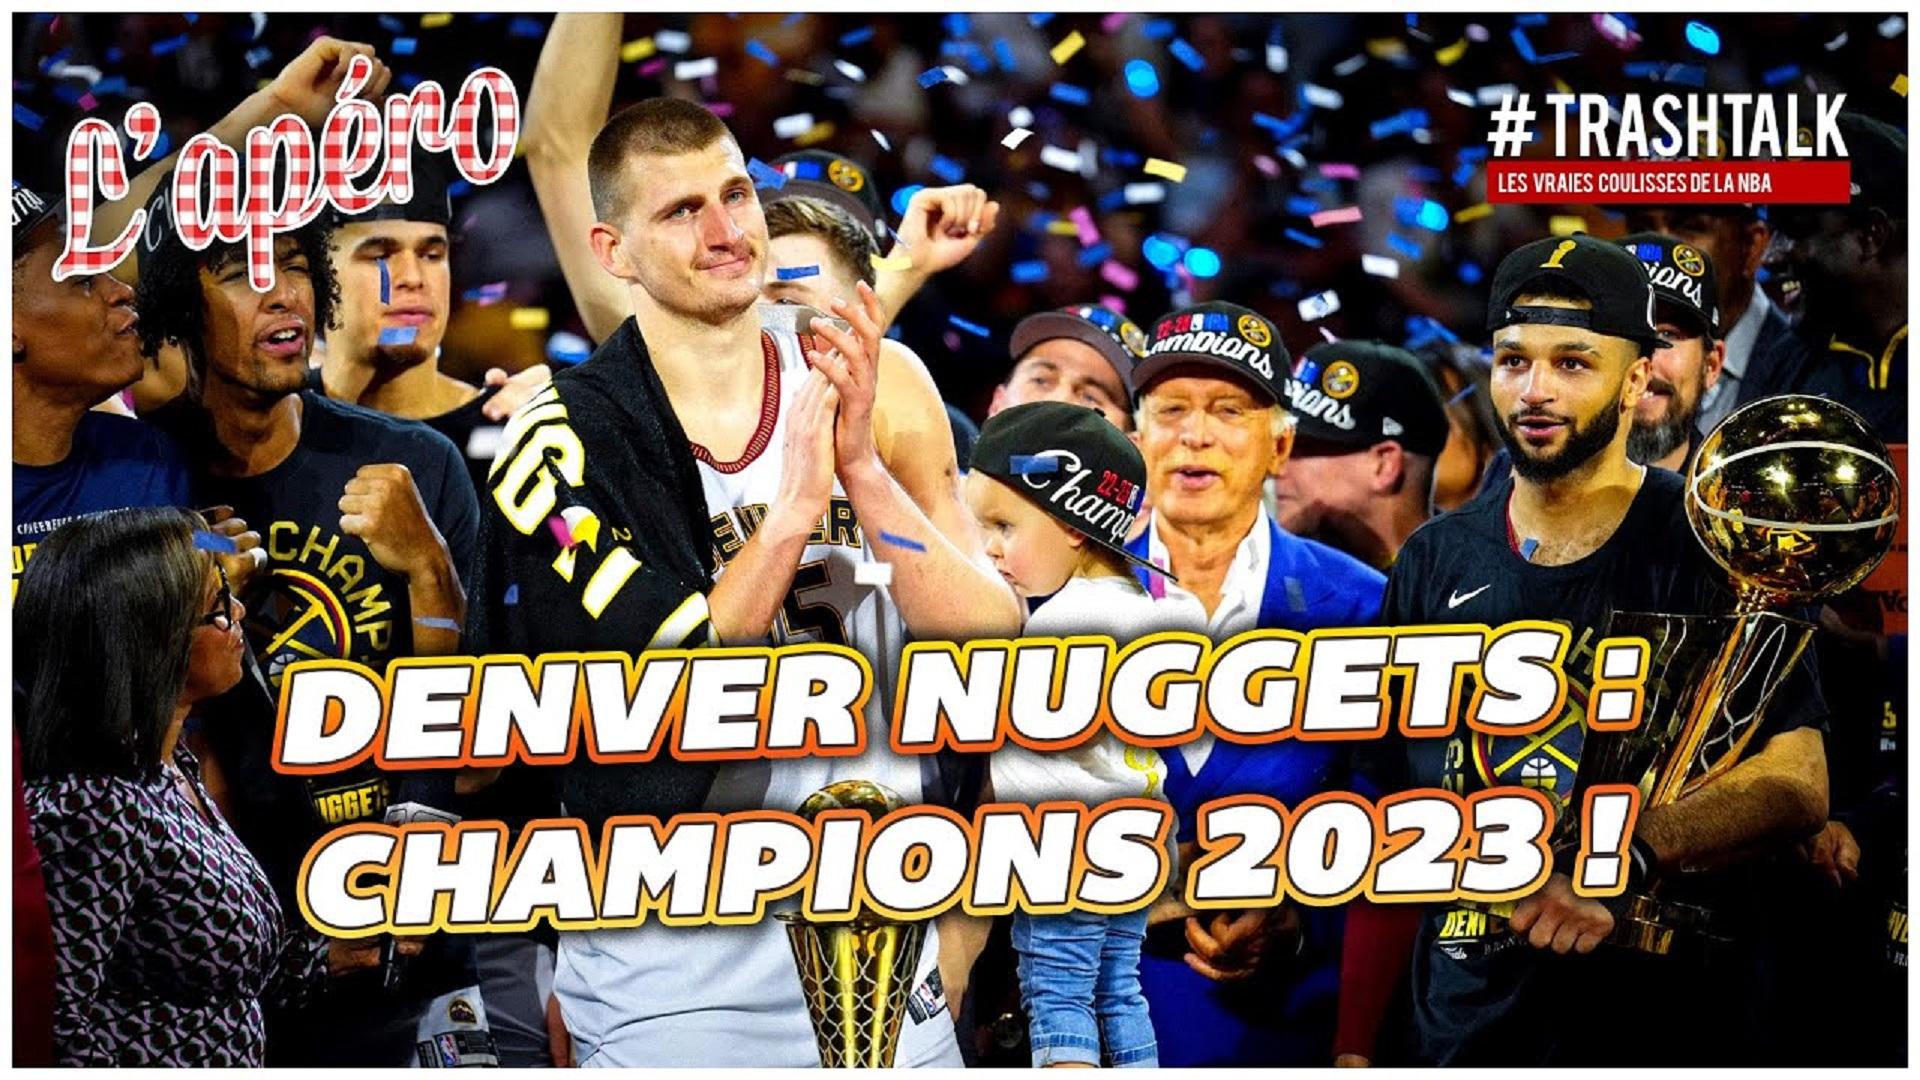 Denver Nuggets apéro TrashTalk 13 juin 2023